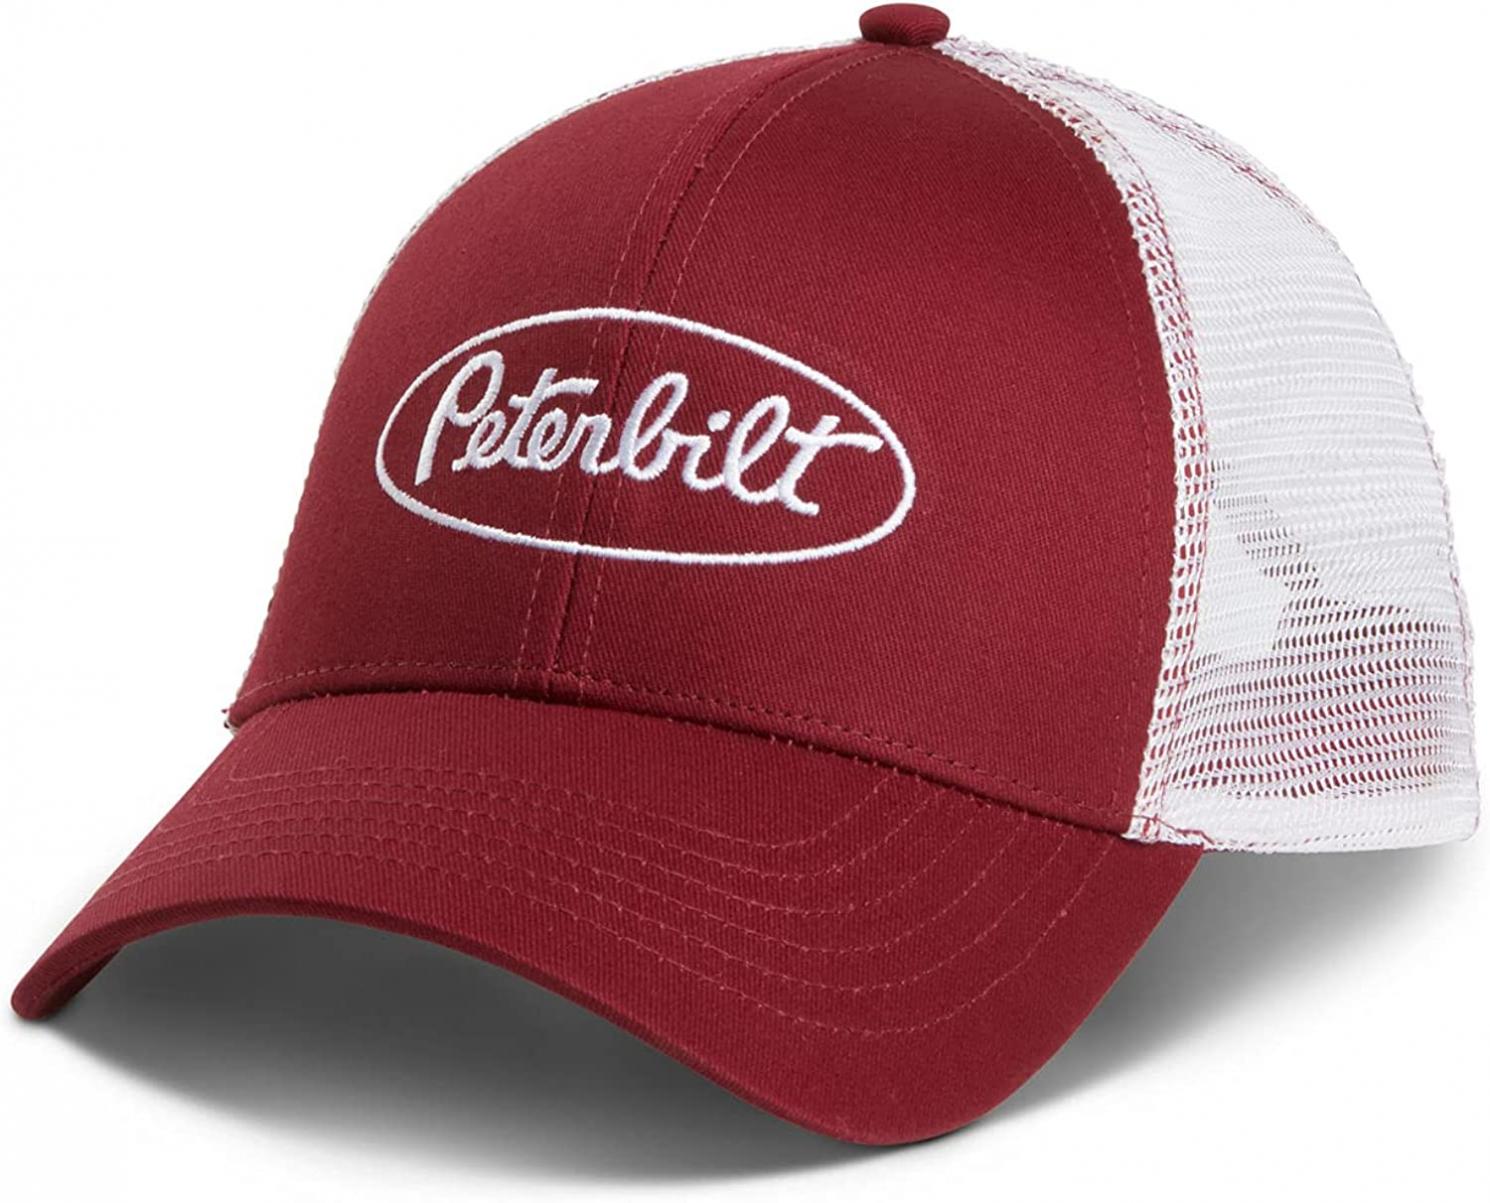 BDA Peterbilt Cooling Mesh Embroidered Logo Hat, Trucker Snapback Cap, Maroon, One Size